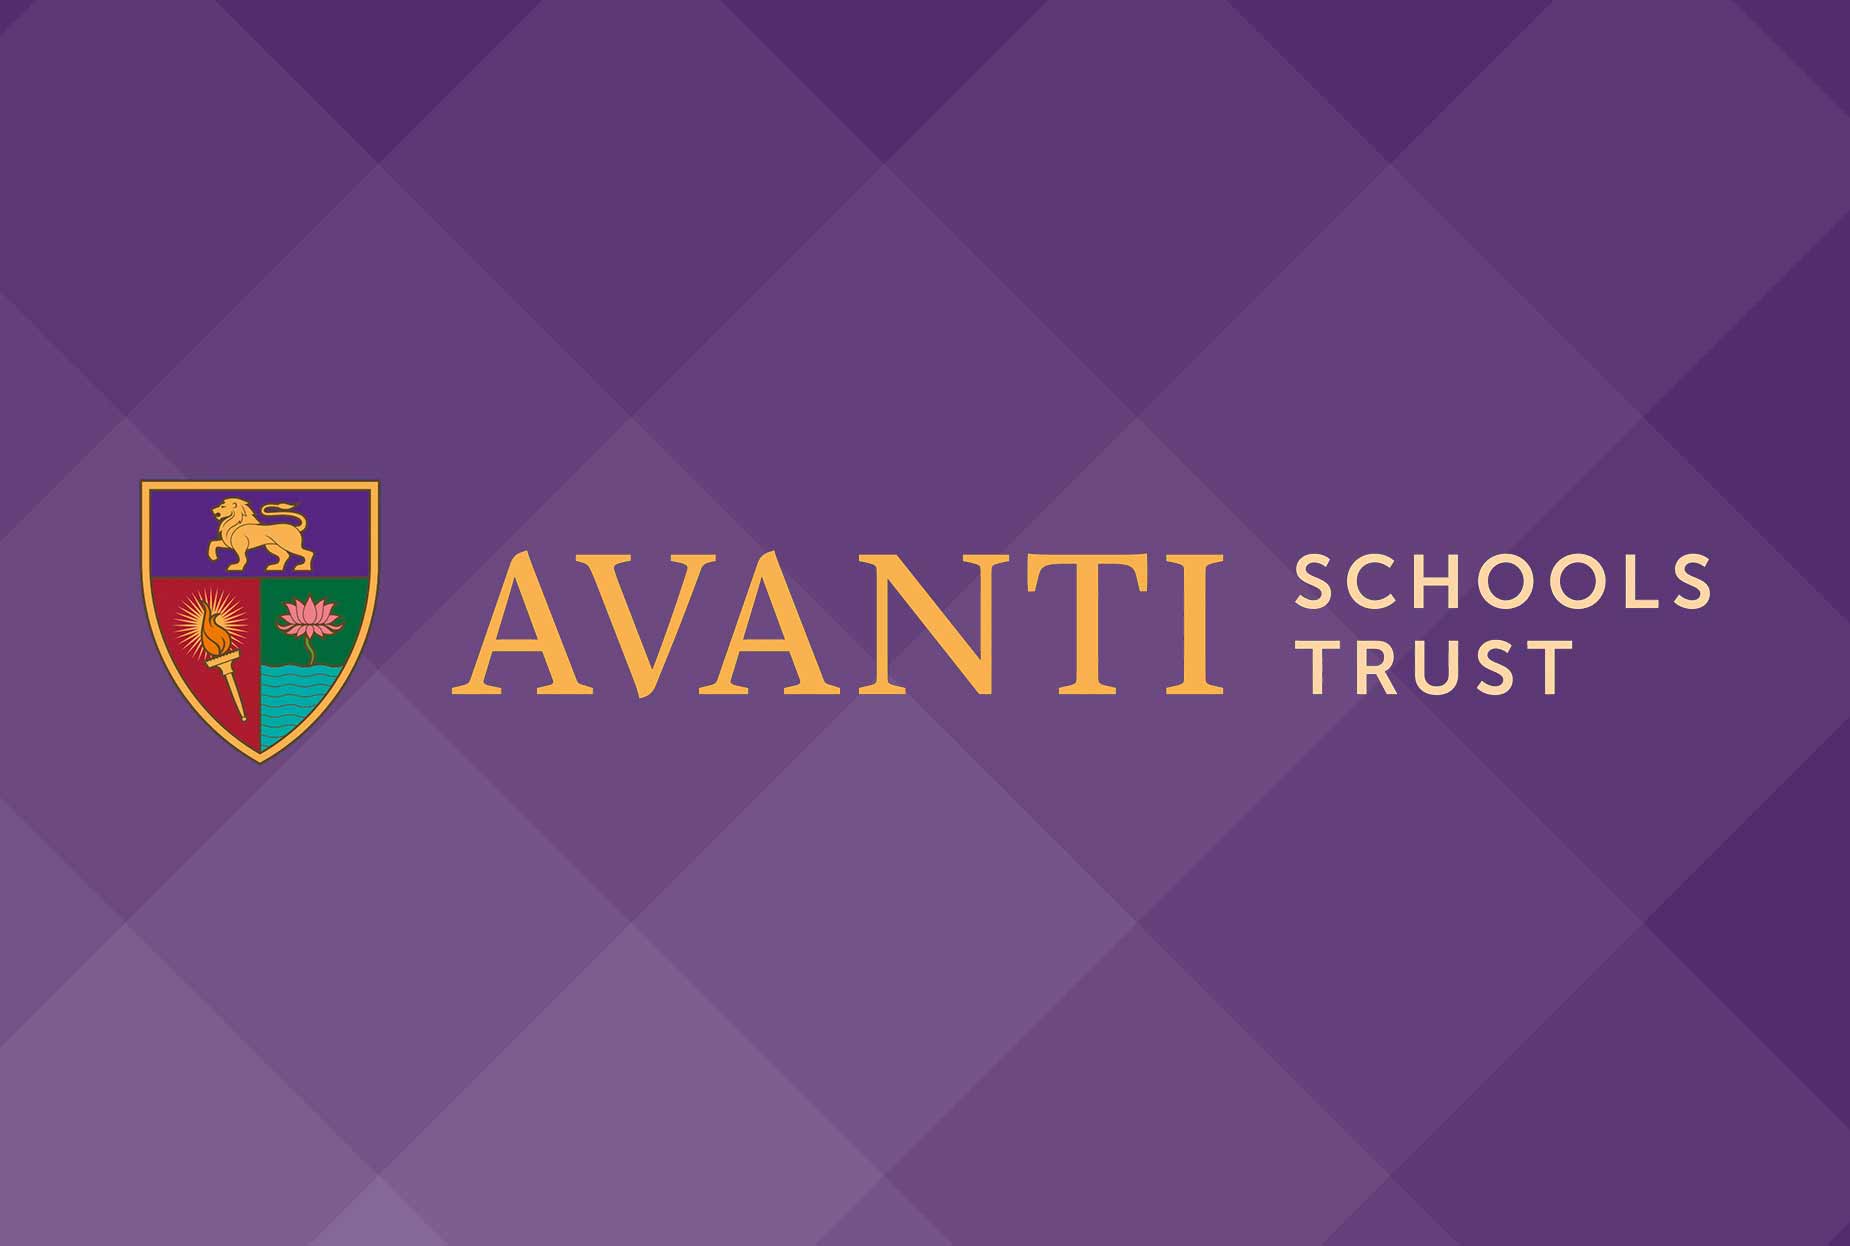 Statement in relation to the transfer of SW Steiner Academies to Avanti Schools Trust